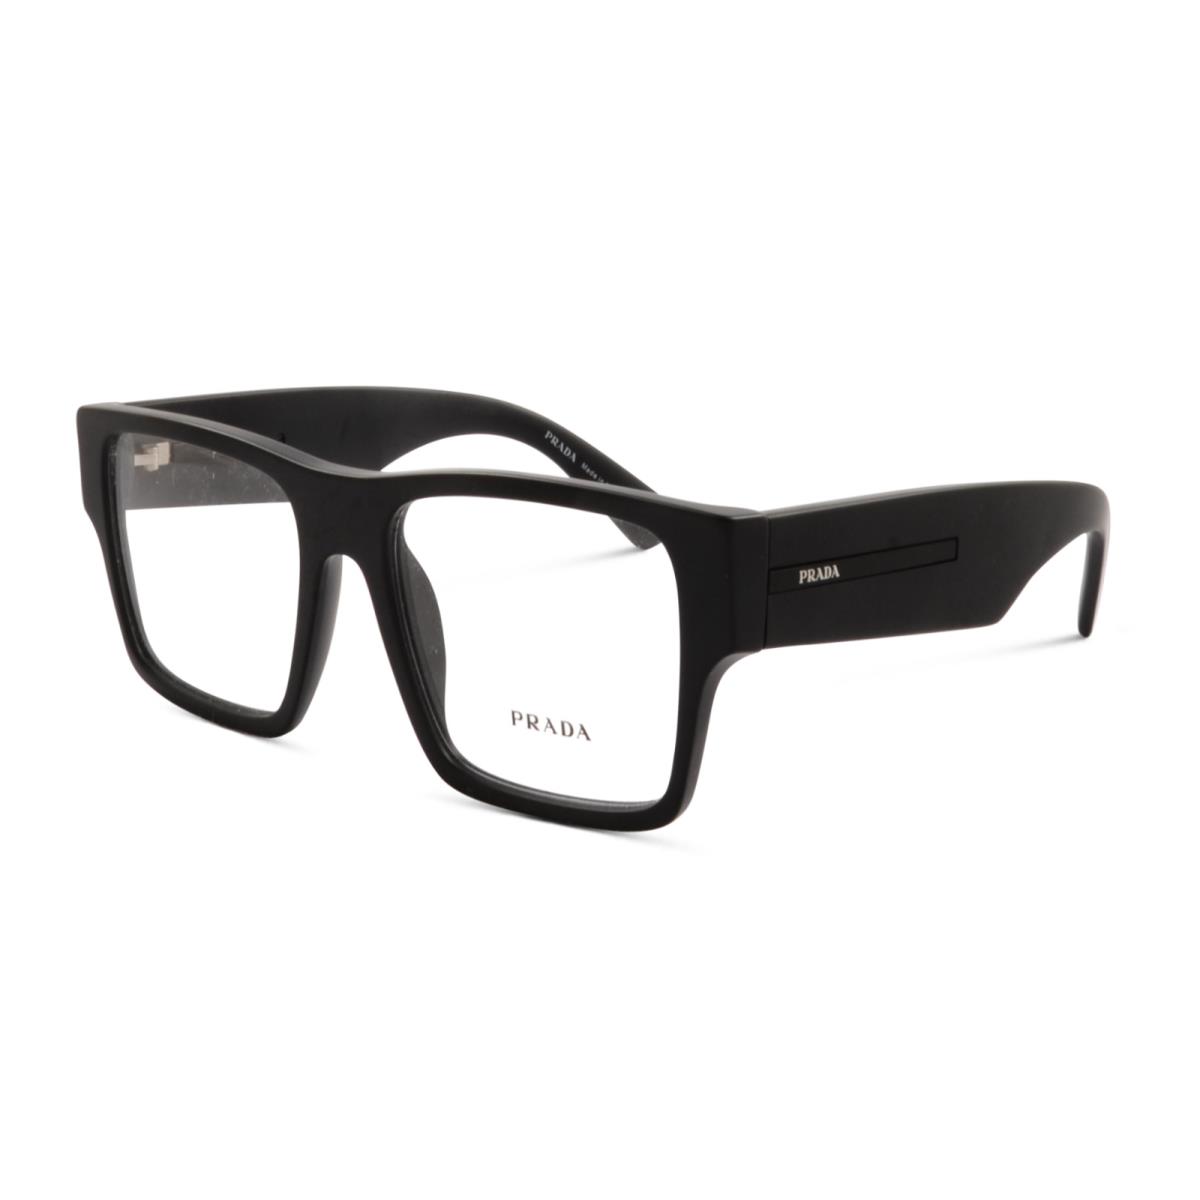 Prada Eyeglasses Vpr A08 12P-1O1 52-18 140 Matte Black Frames W/wide Temples - Frame: Matte Black